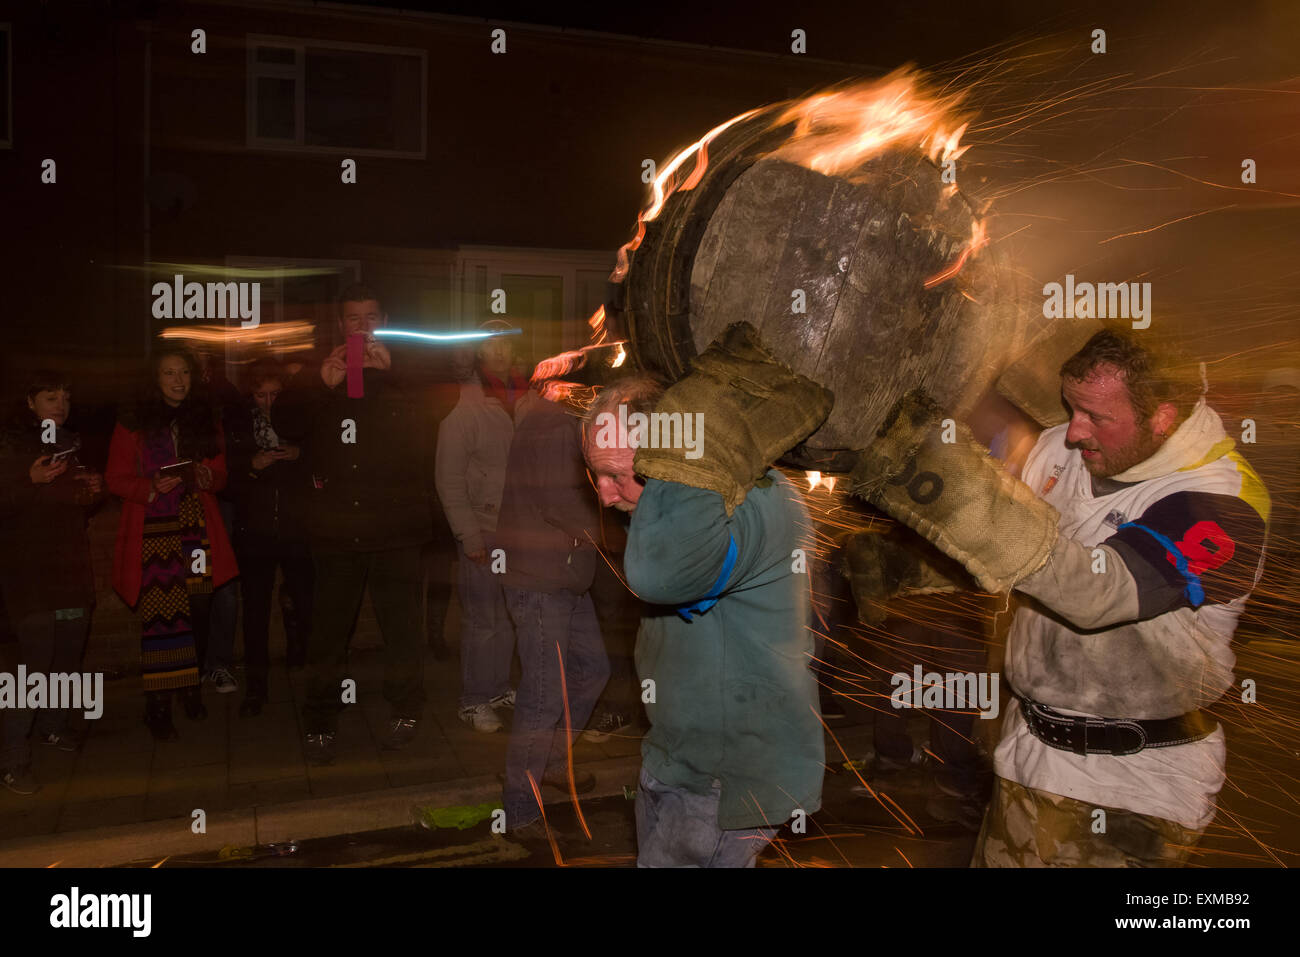 Man carrying a burning barrel on Yonder Street, to mark Bonfire Night, 5 November, at the Tar Barrels festival, Ottery St Mary, Devon, England Stock Photo